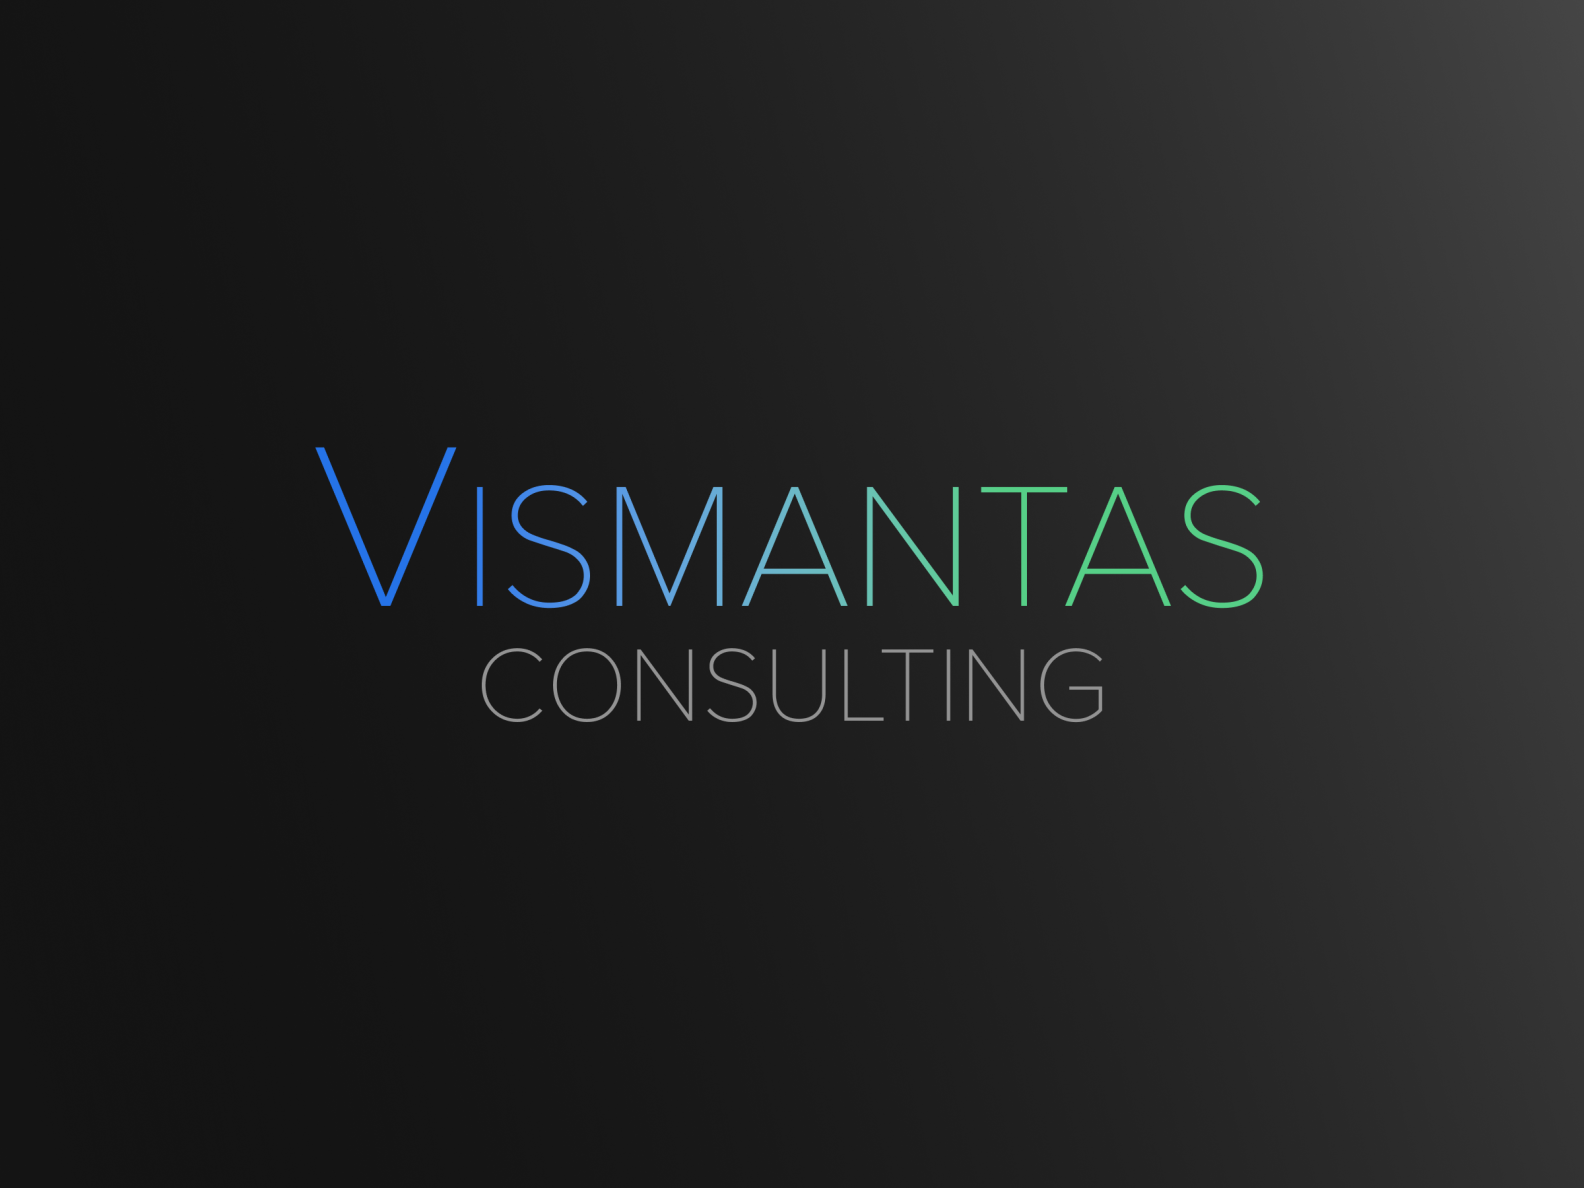 Vismantas Consulting Logo by Yash Moondhra on Dribbble